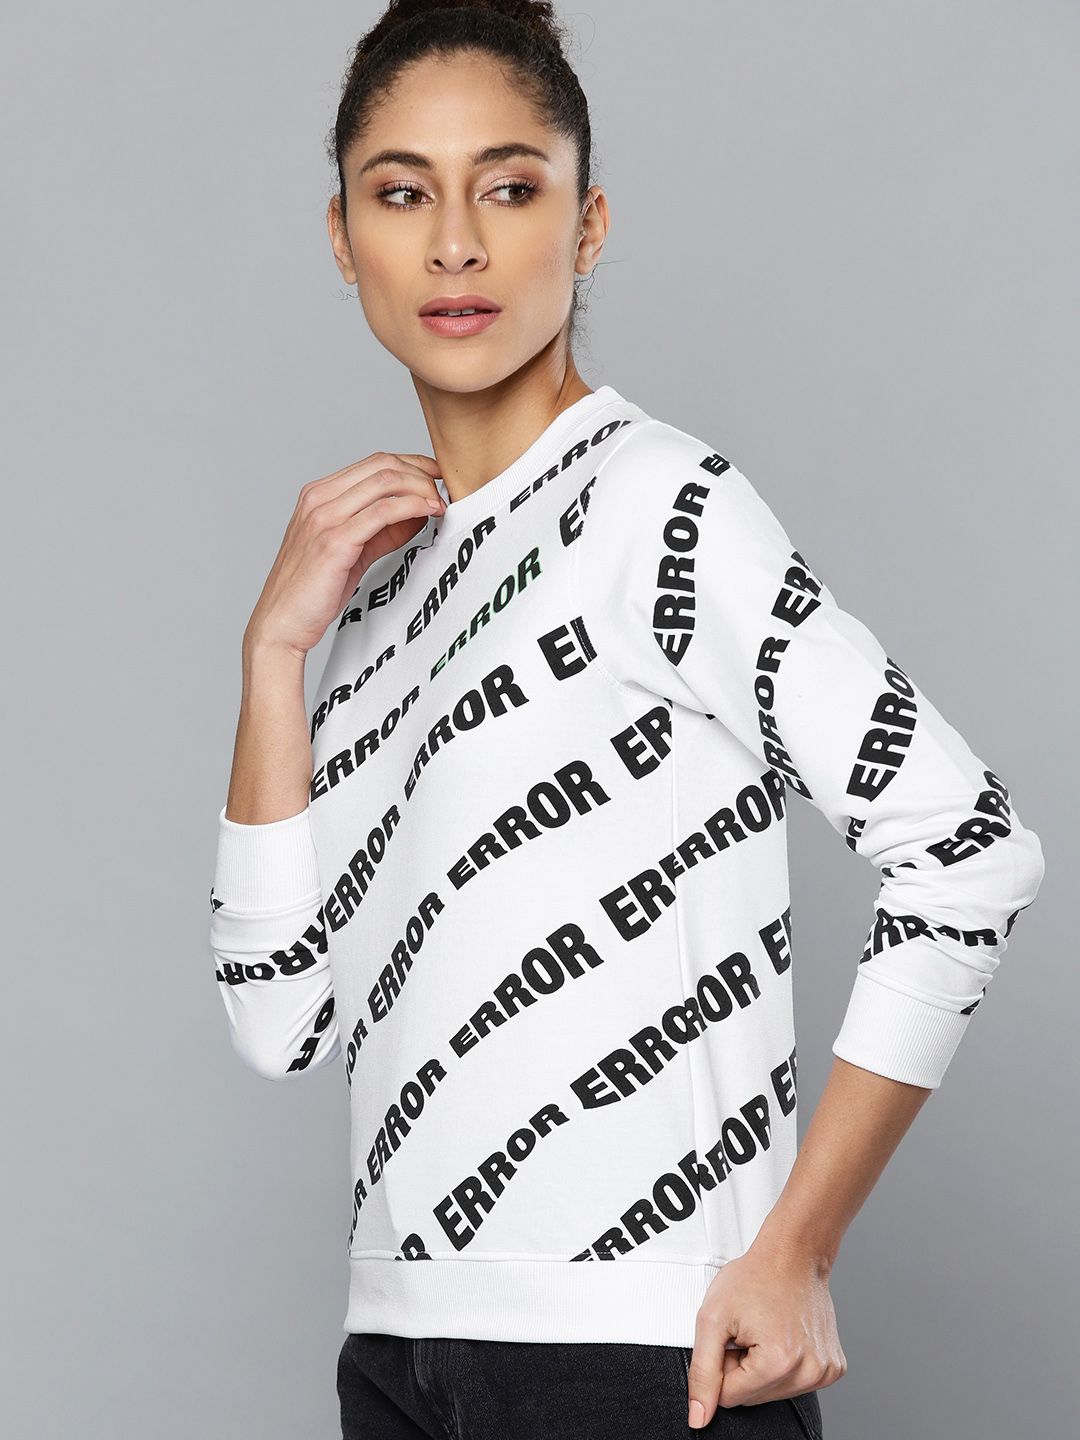 Kook N Keech Women White & Black Typographic Print Sweatshirt Price in India